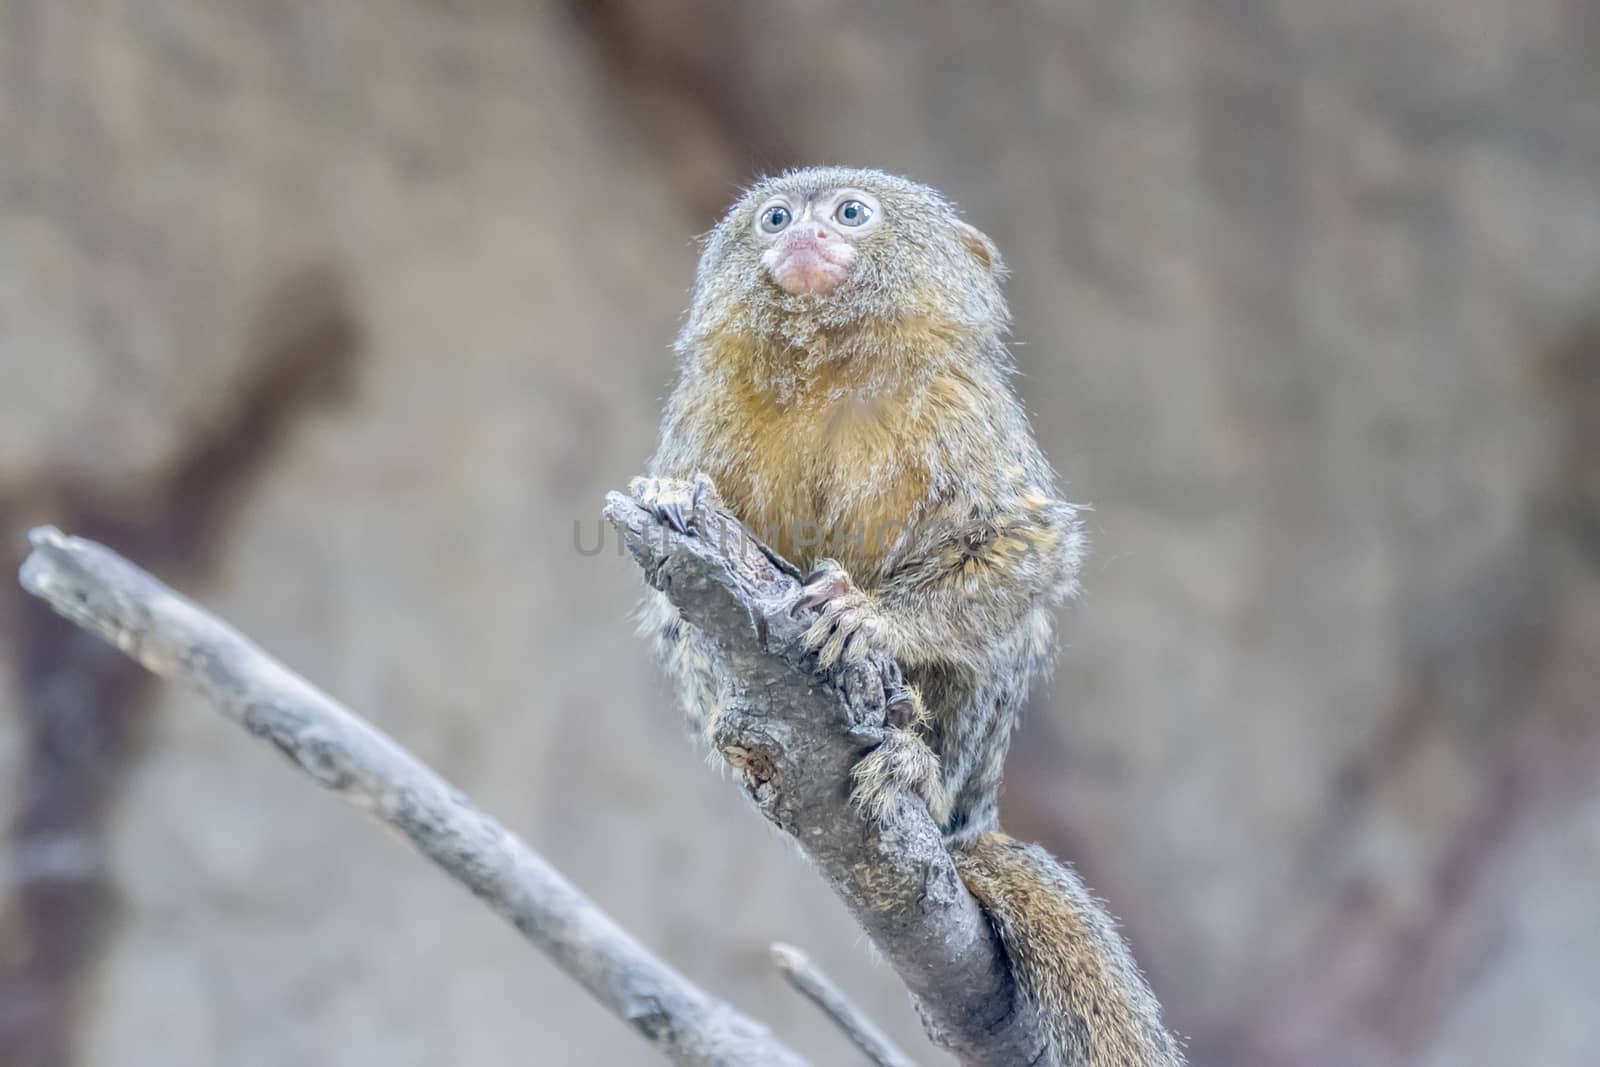 Callithrix pygmaea, Pygmy marmoset